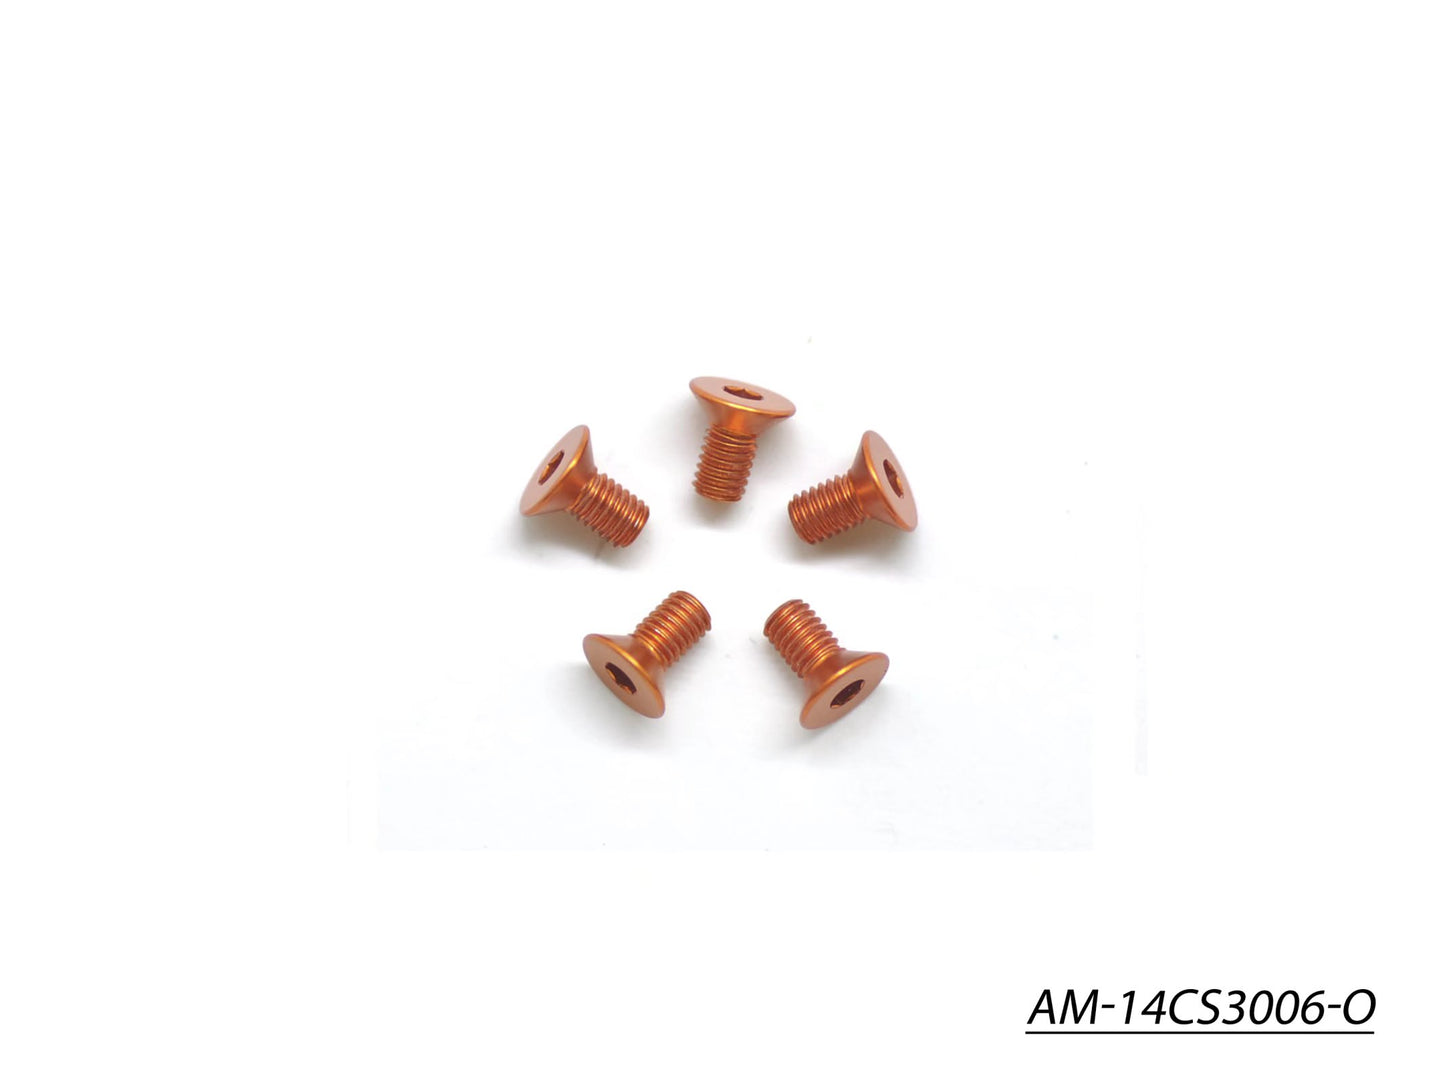 Alu Screw Allen Countersunk M3X6 Orange (7075) (5) (AM-14CS3006-O)